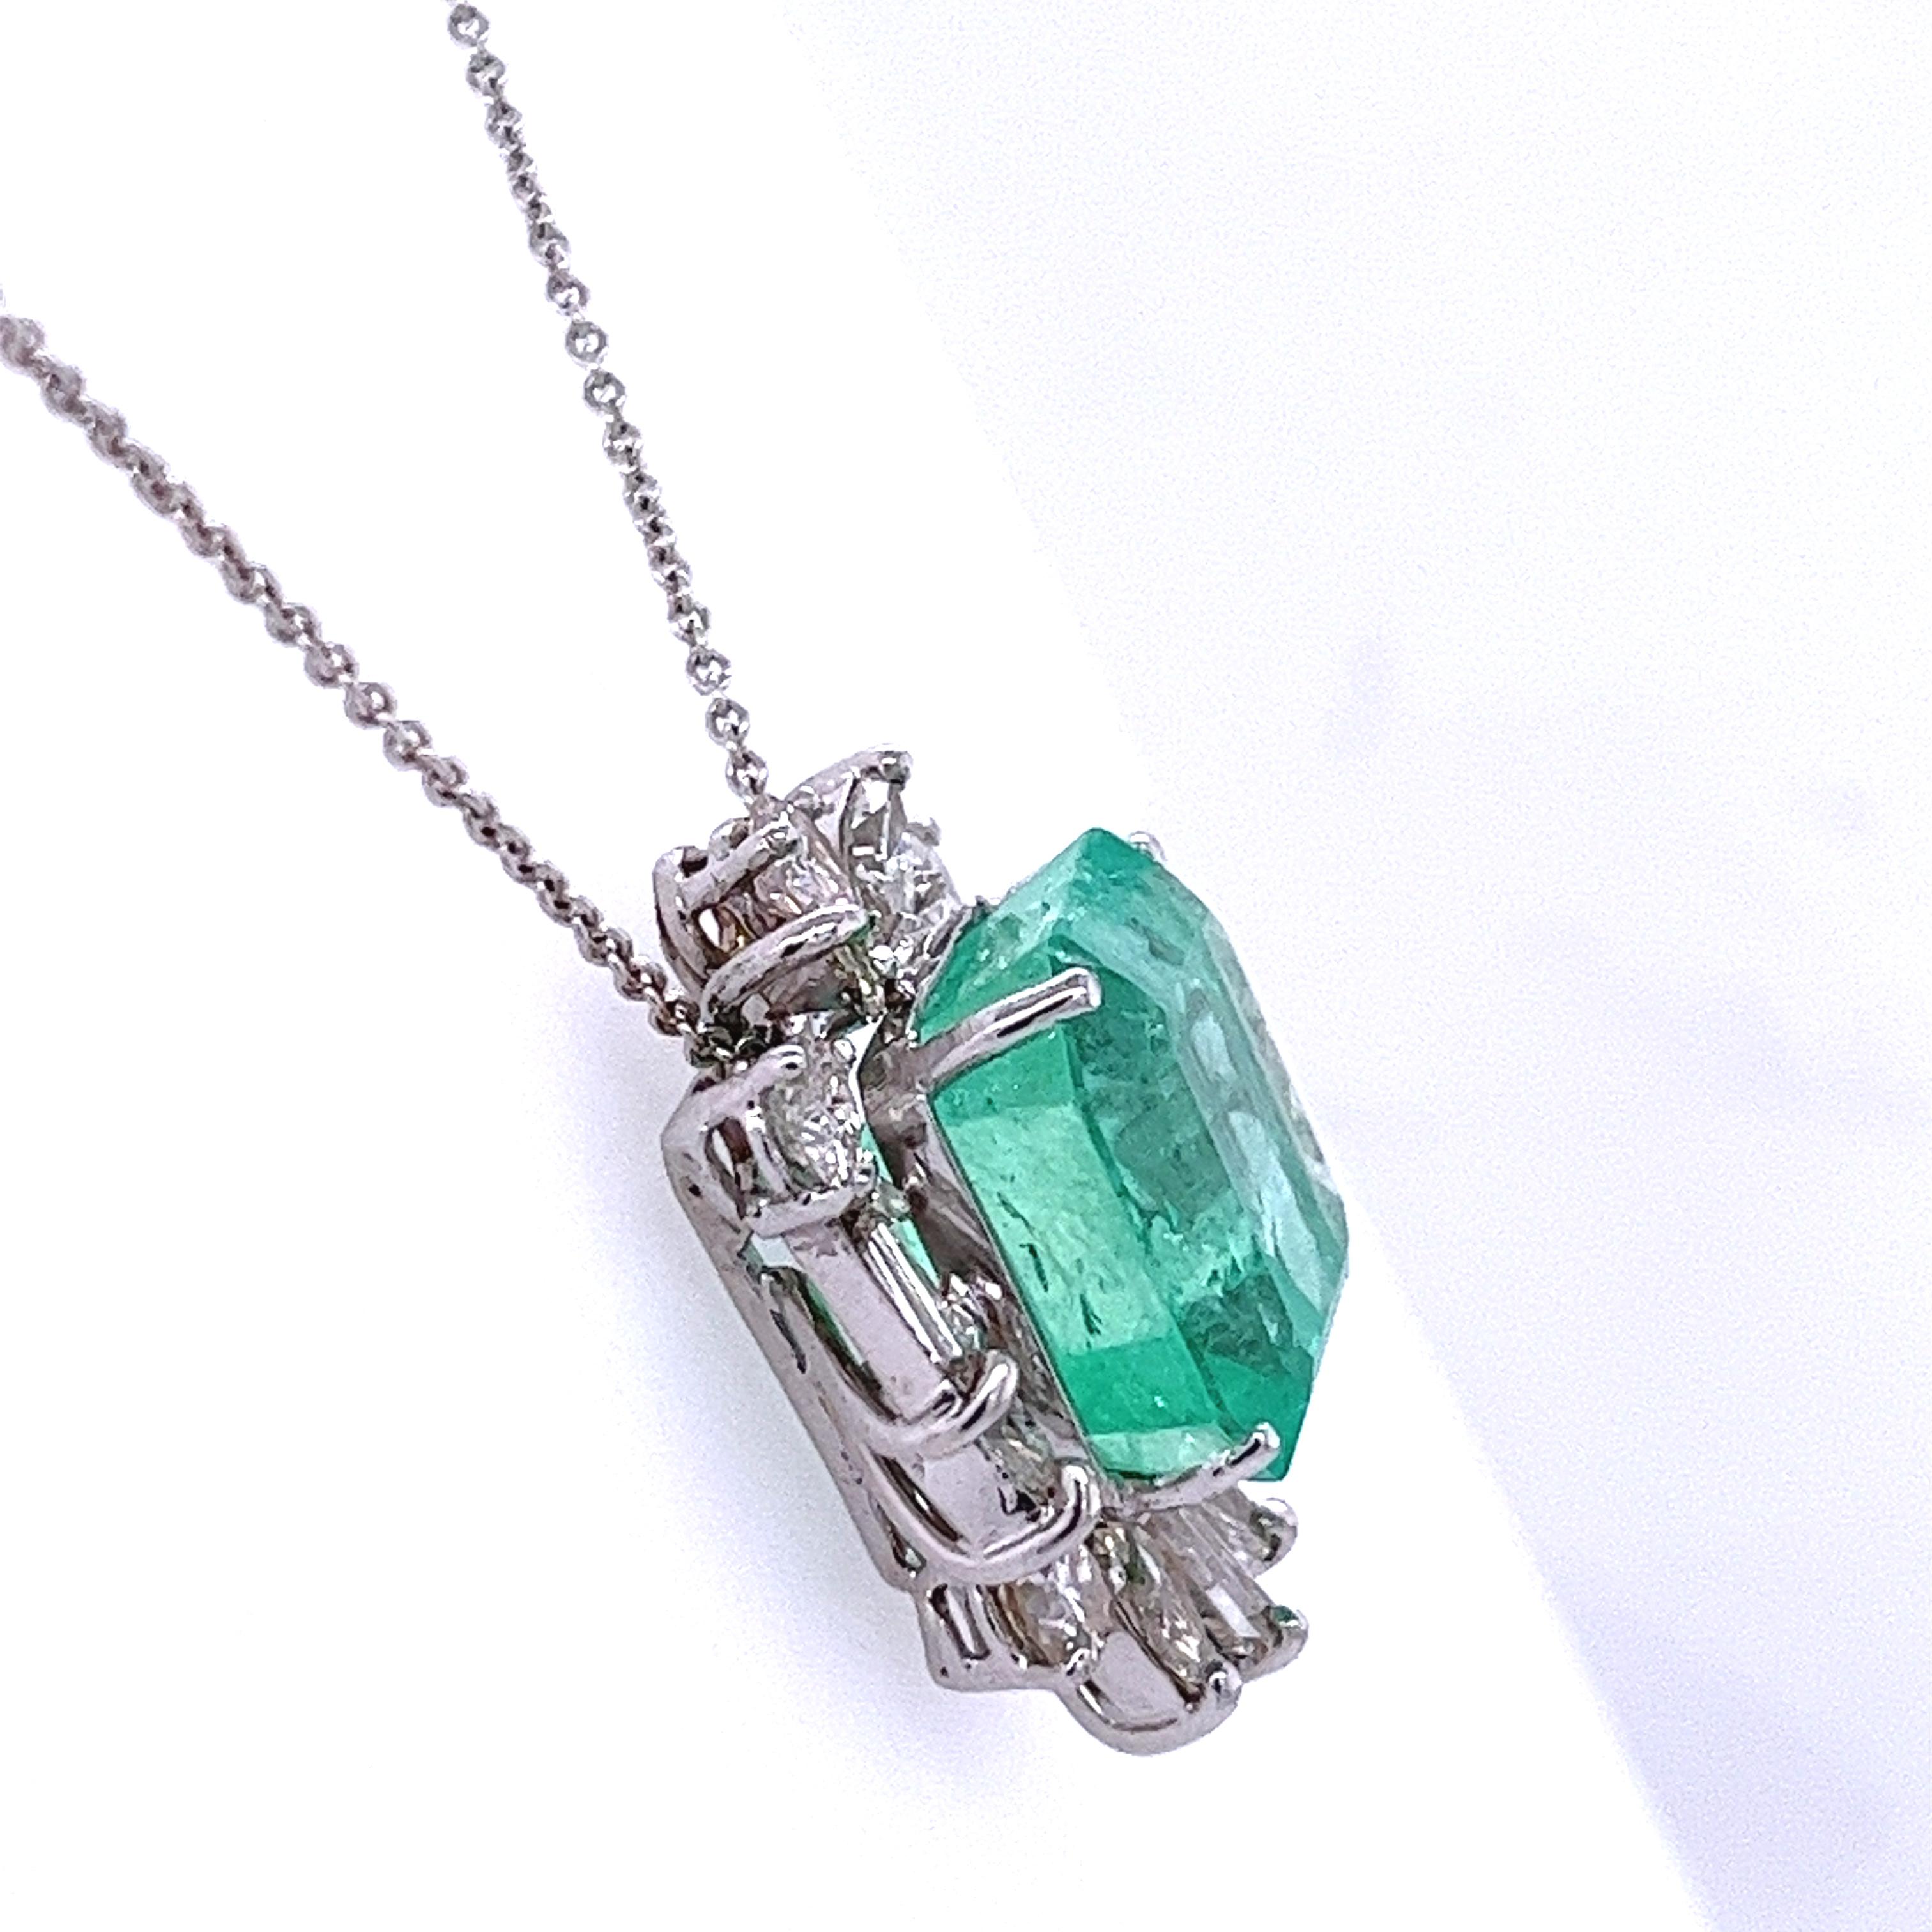 11.54 Carat Colombian Emerald and Baguette Cut Diamonds Pendant Set in Platinum For Sale 5